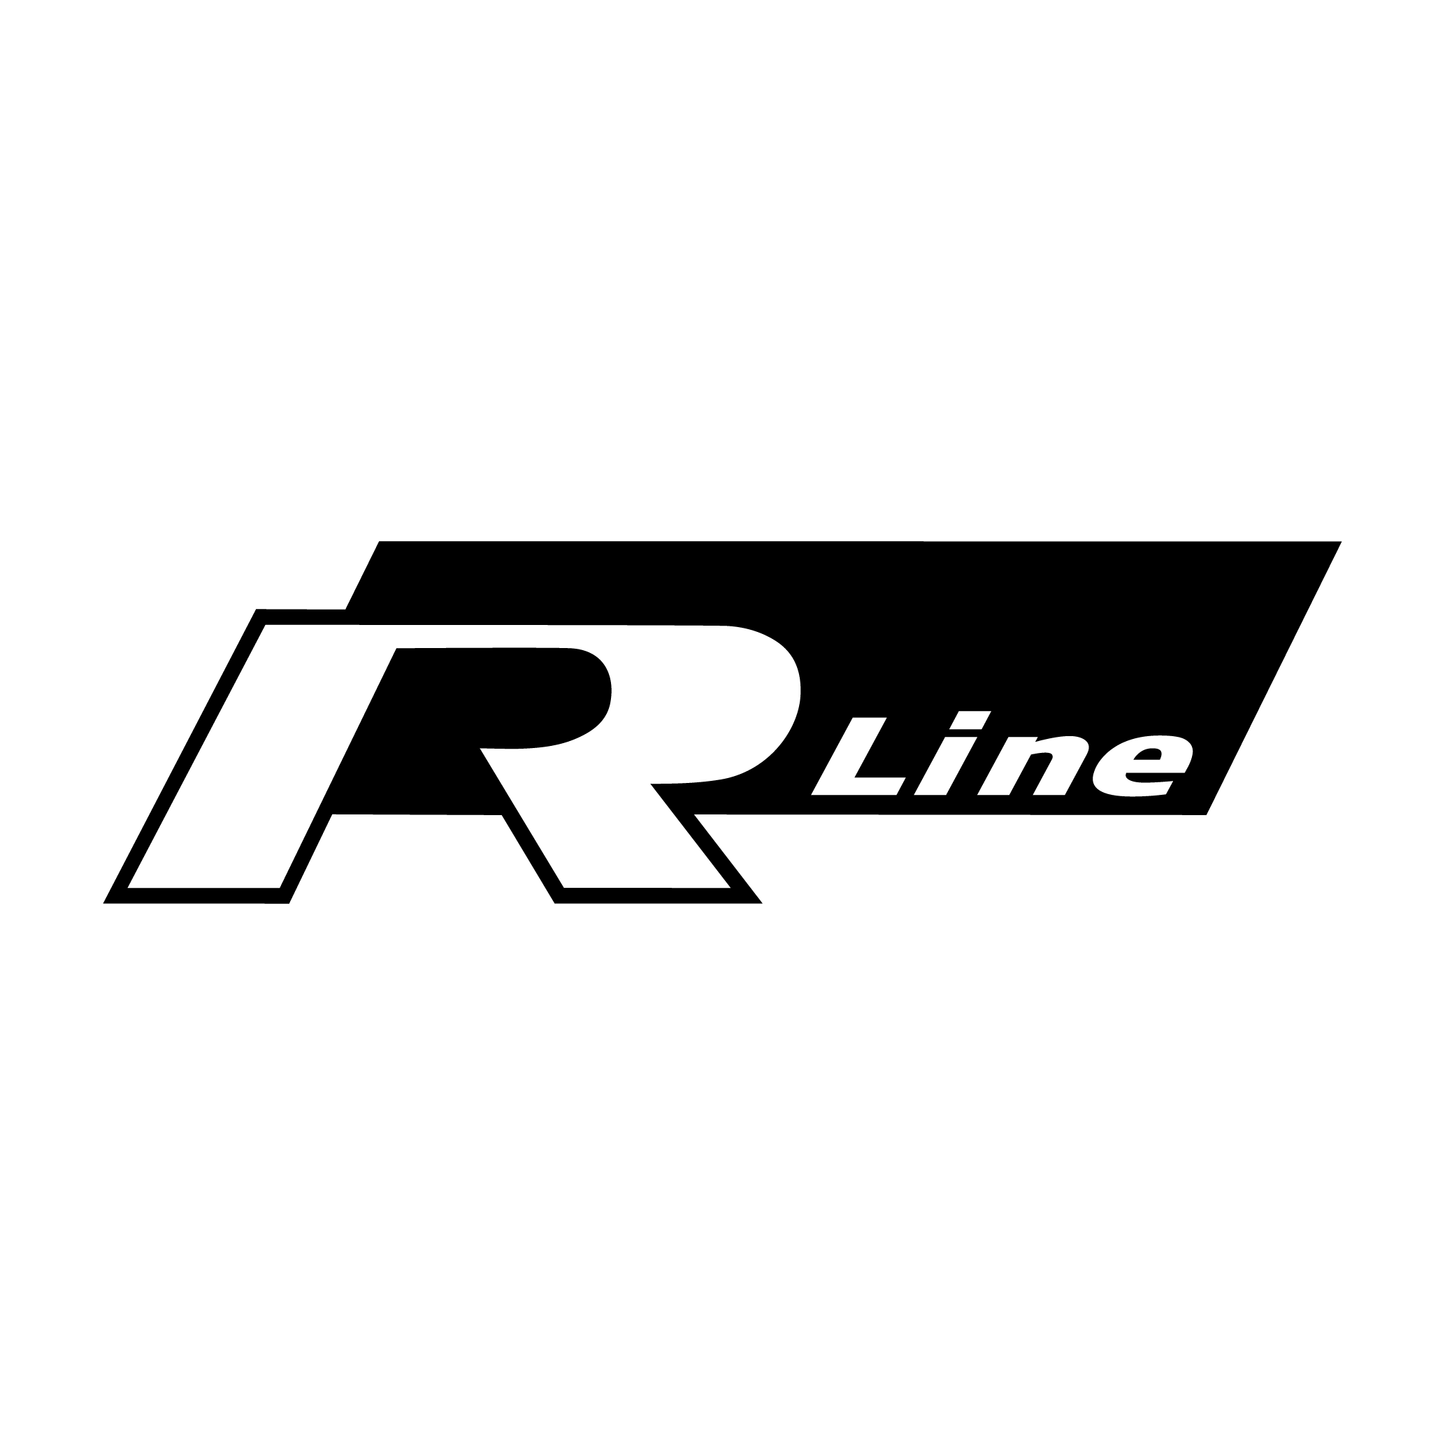 VW R Line logo decal – PrintPeel&Stick